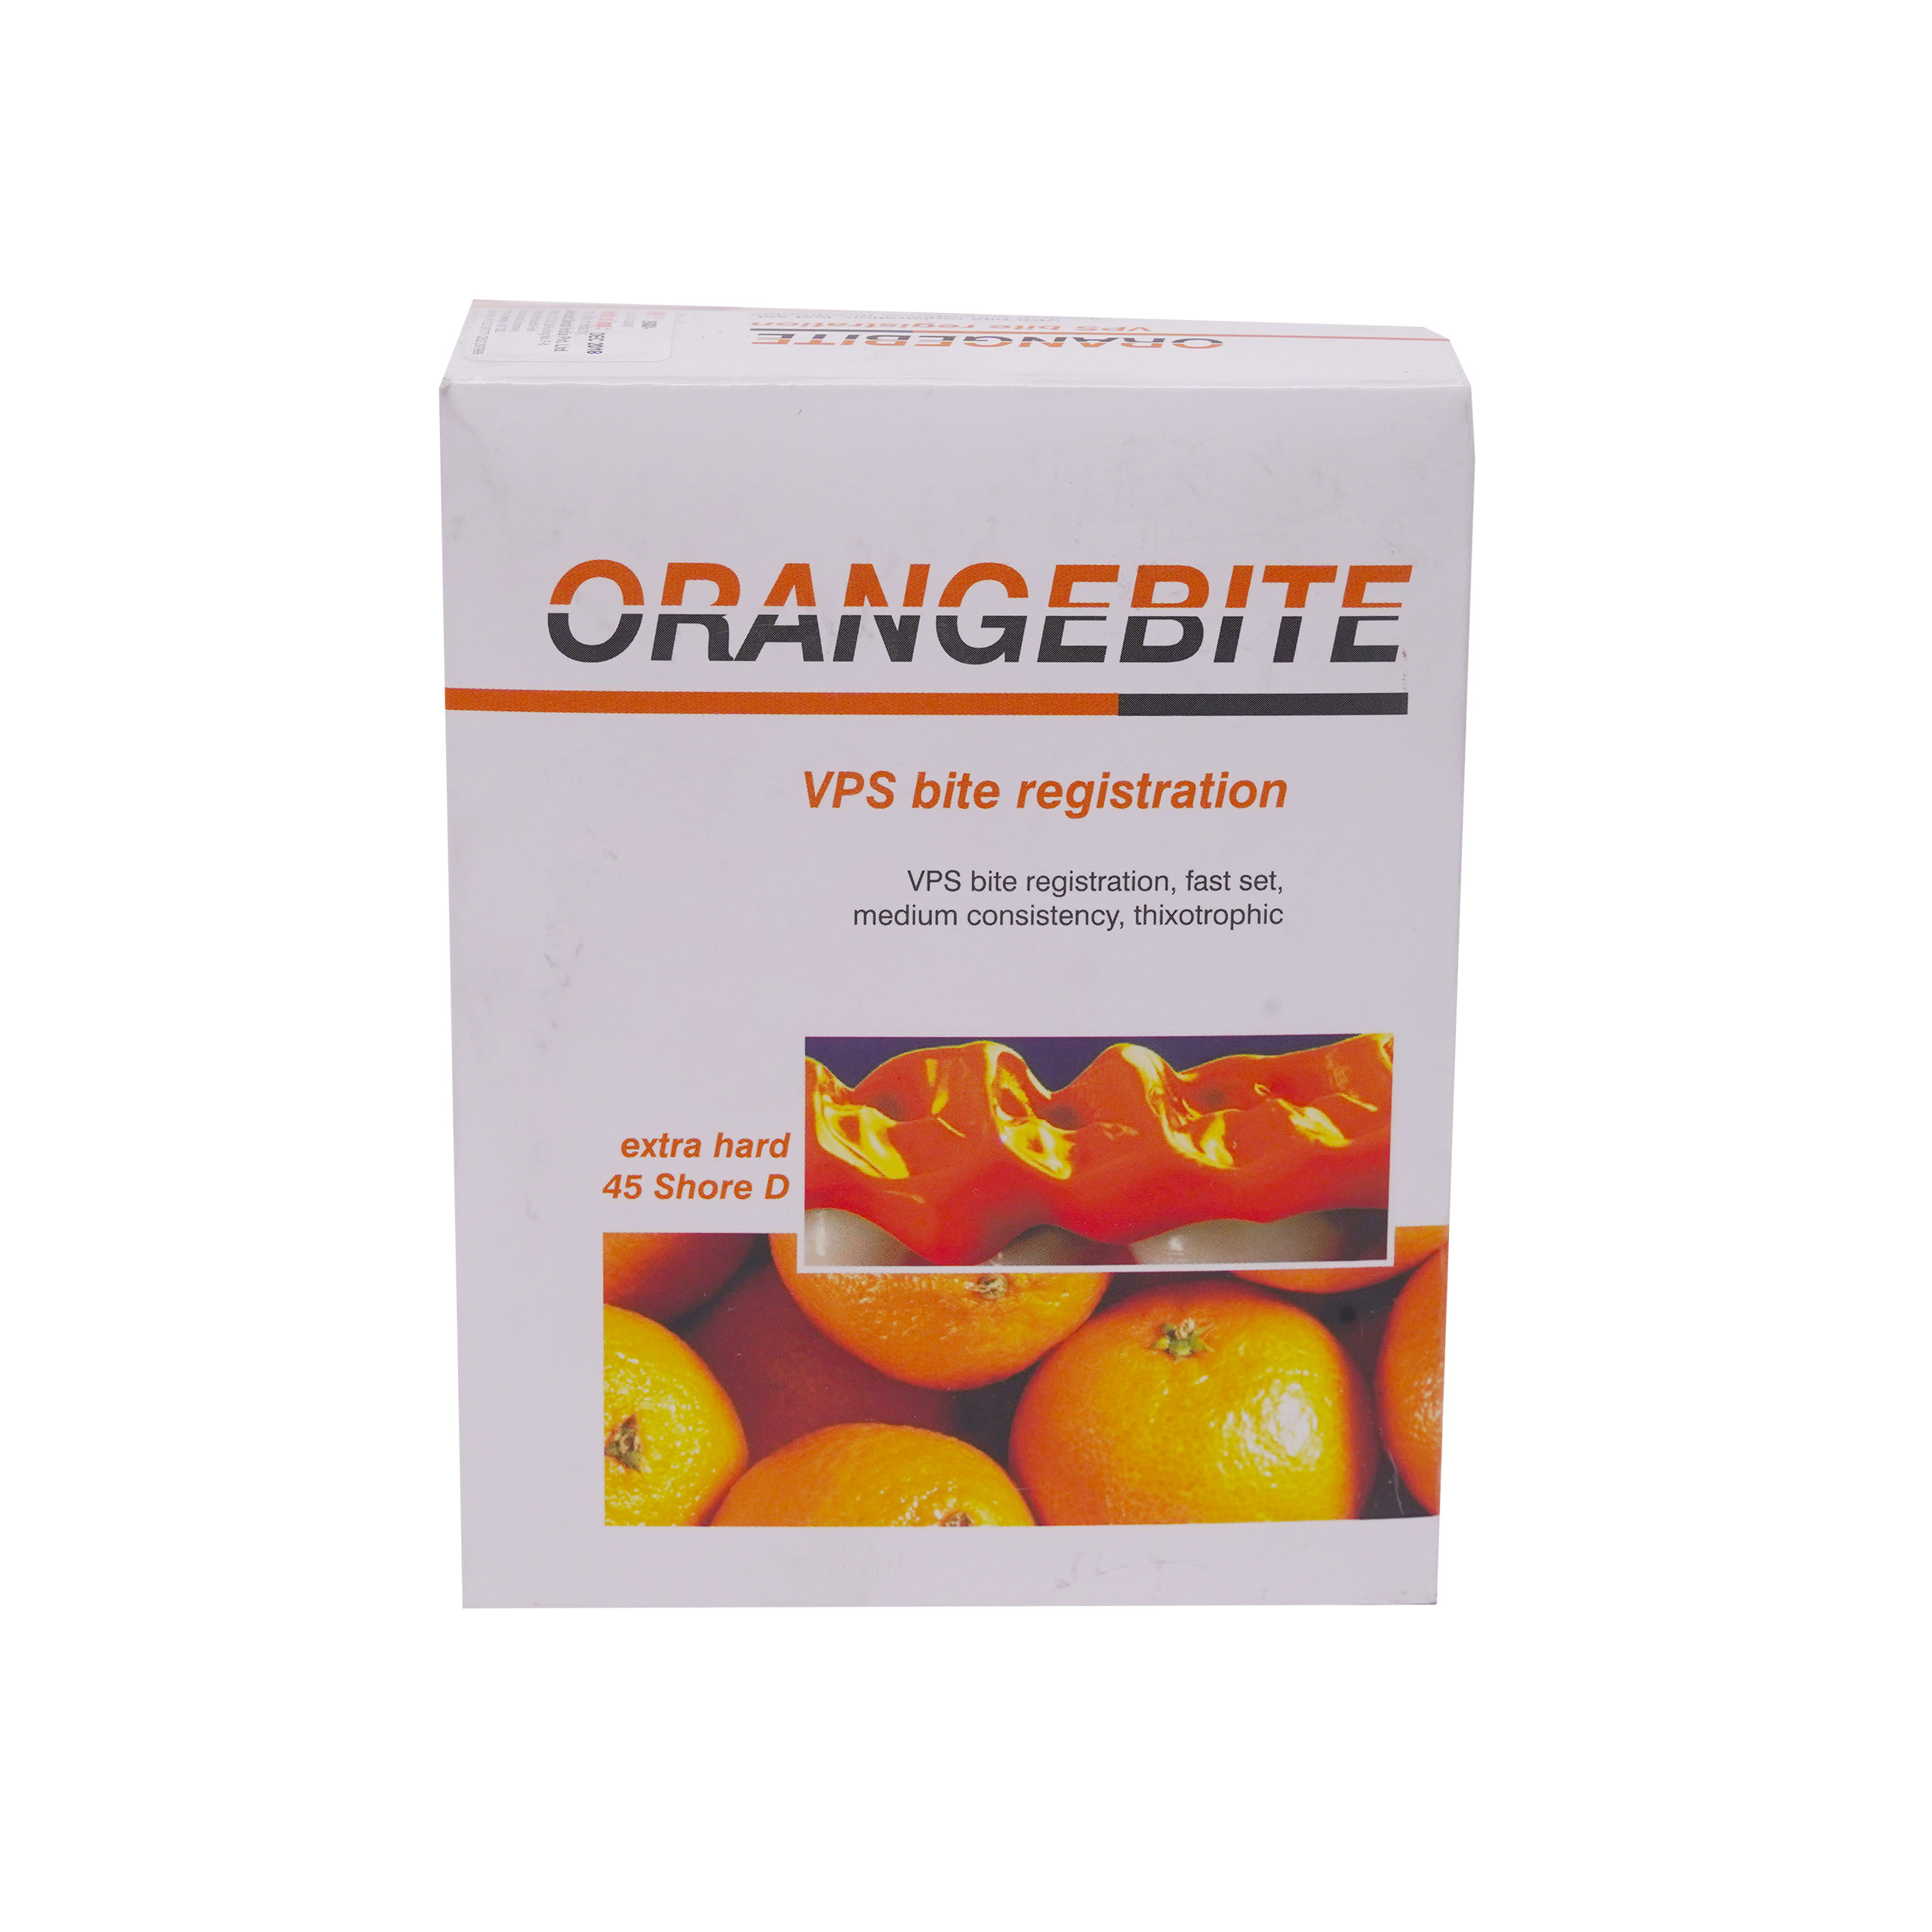 Medicept VPS Bite Registration (Orange Bite)